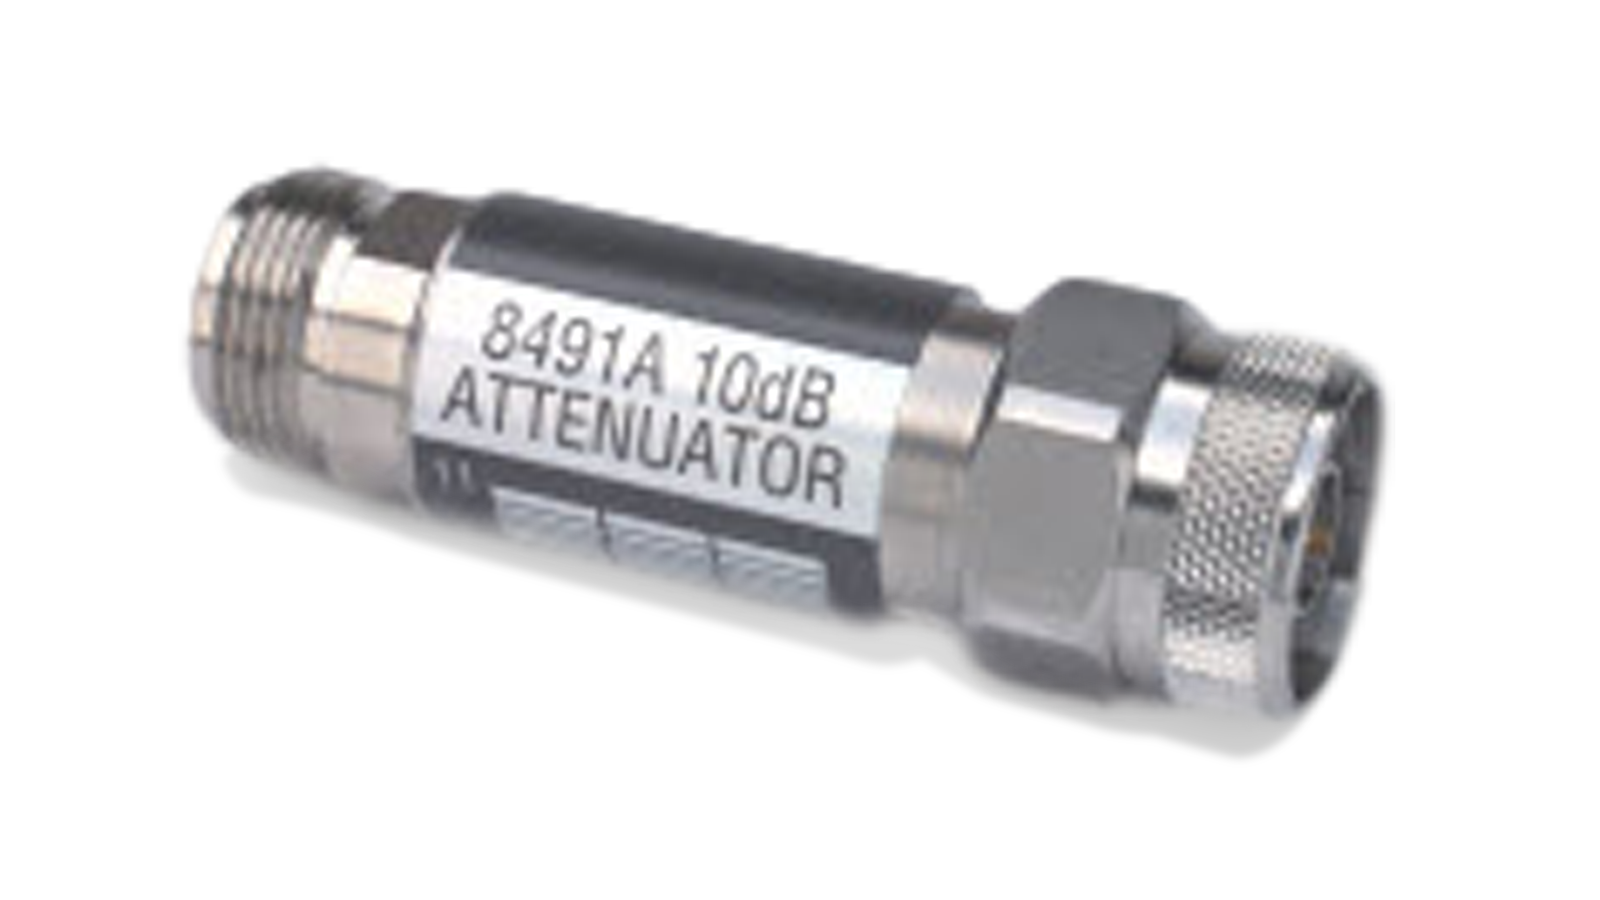 8491A Coaxial Fixed Attenuator